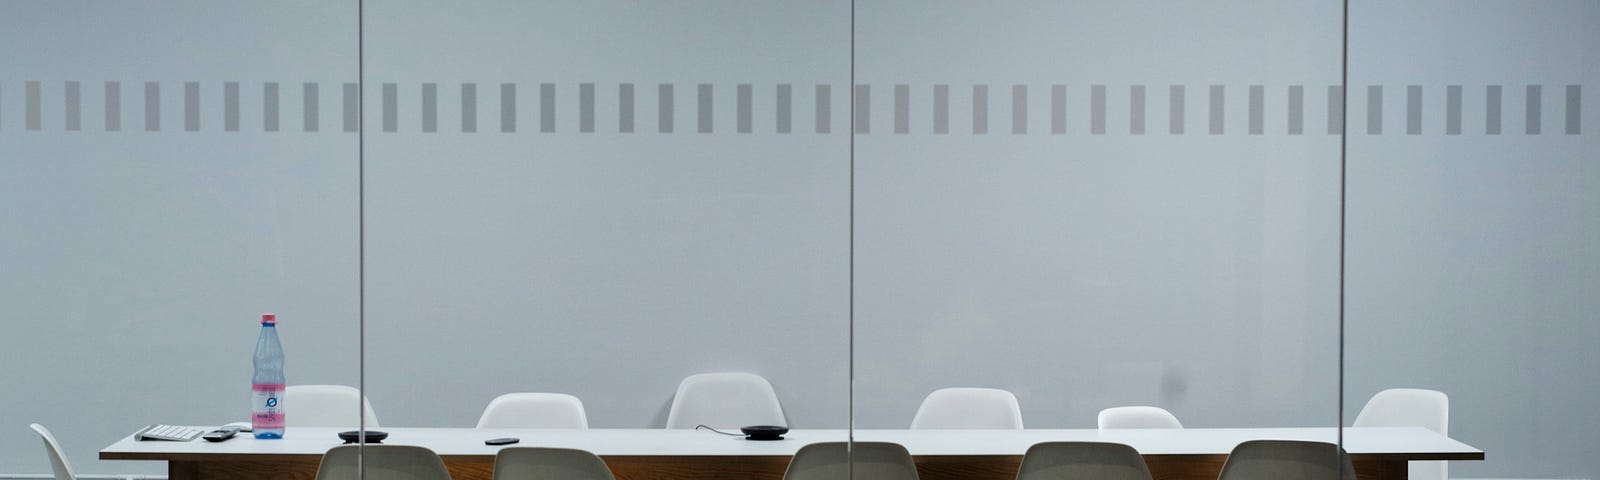 An empty meeting room